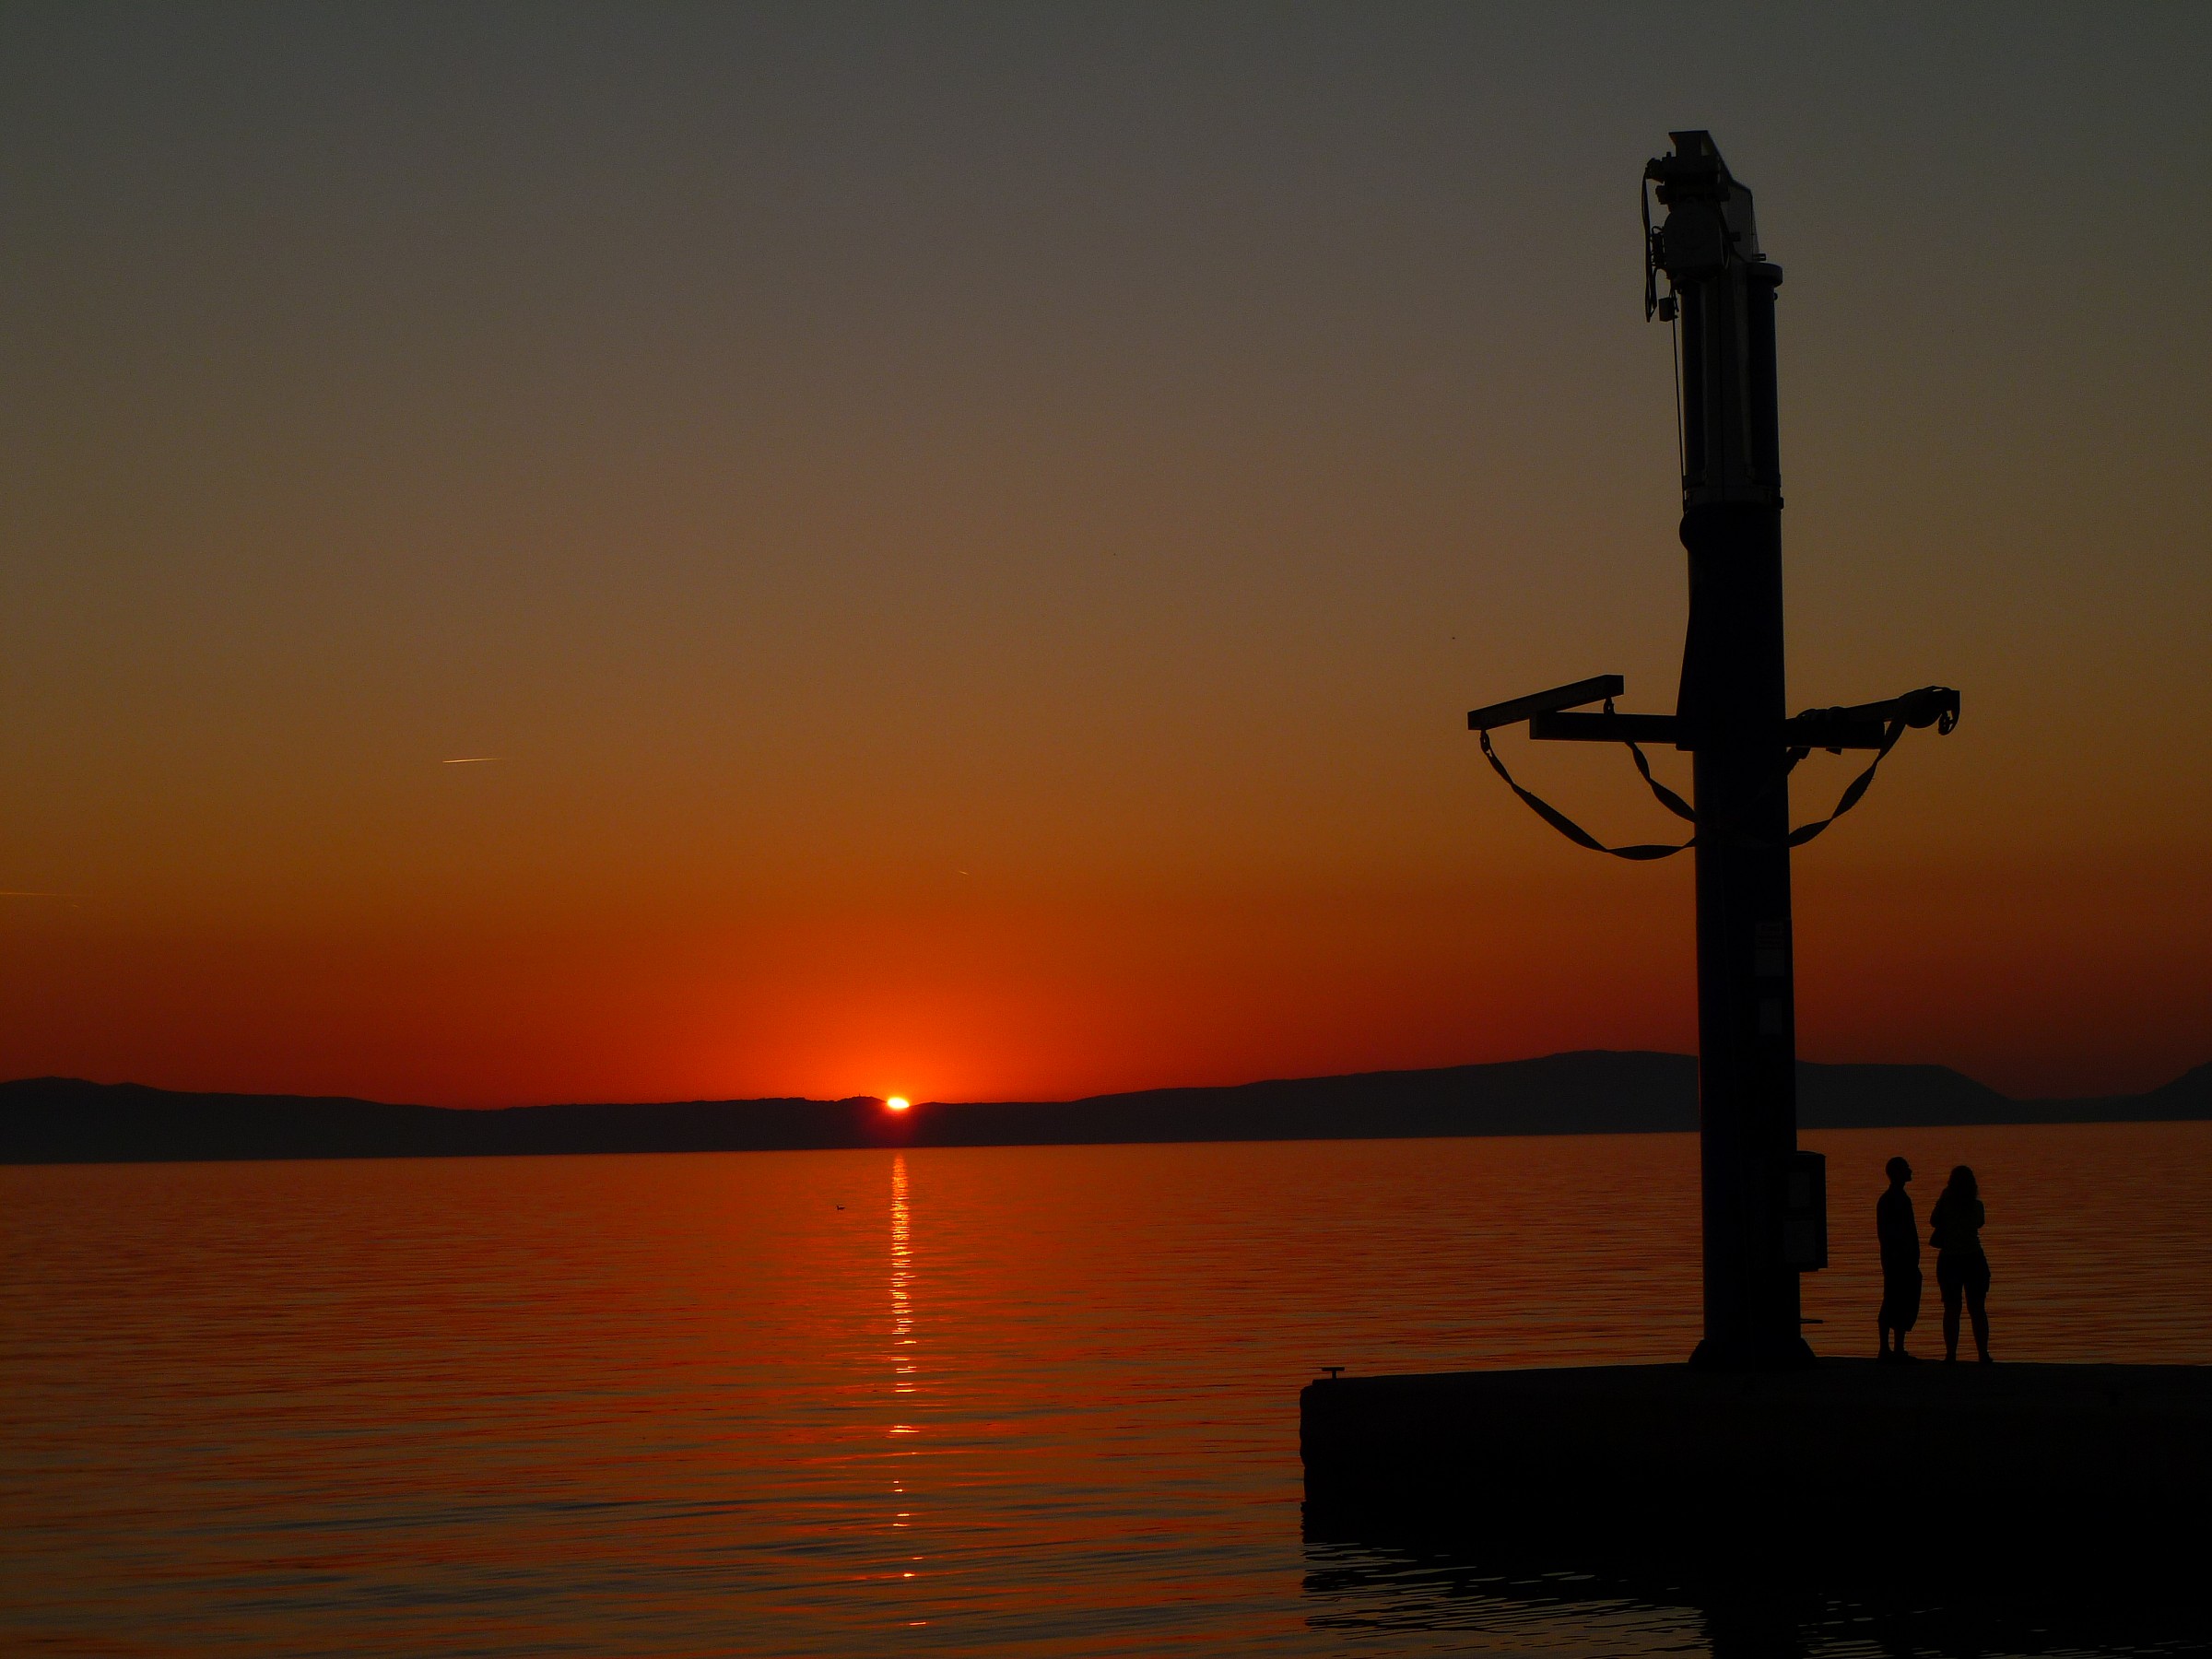 Sunset at Kovacine Cres Croatia...